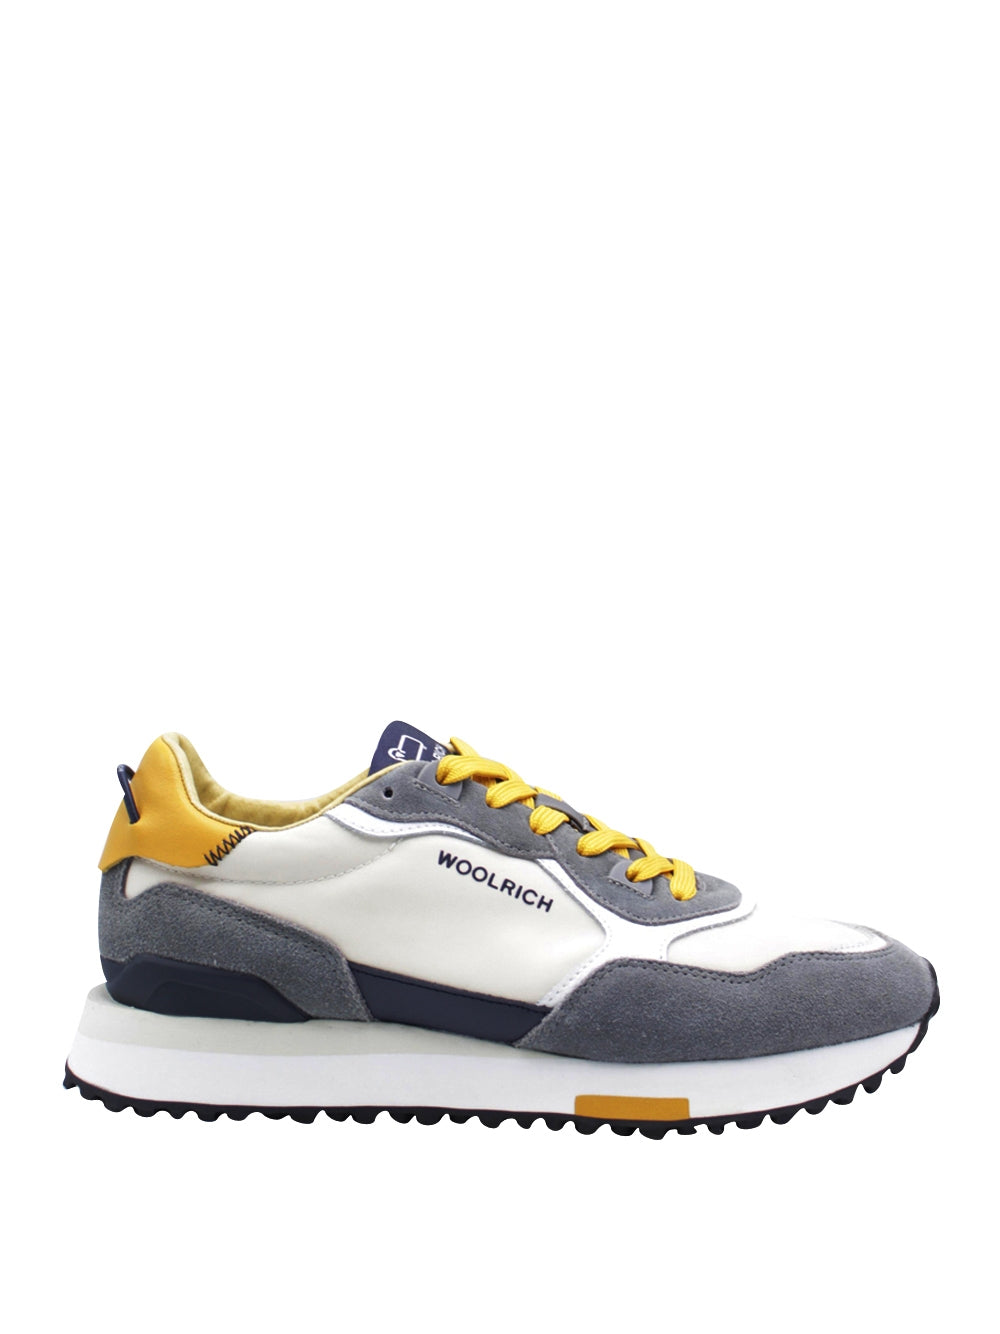 WOOLRICH Sneakers Uomo - Grigio modello WFM241.050